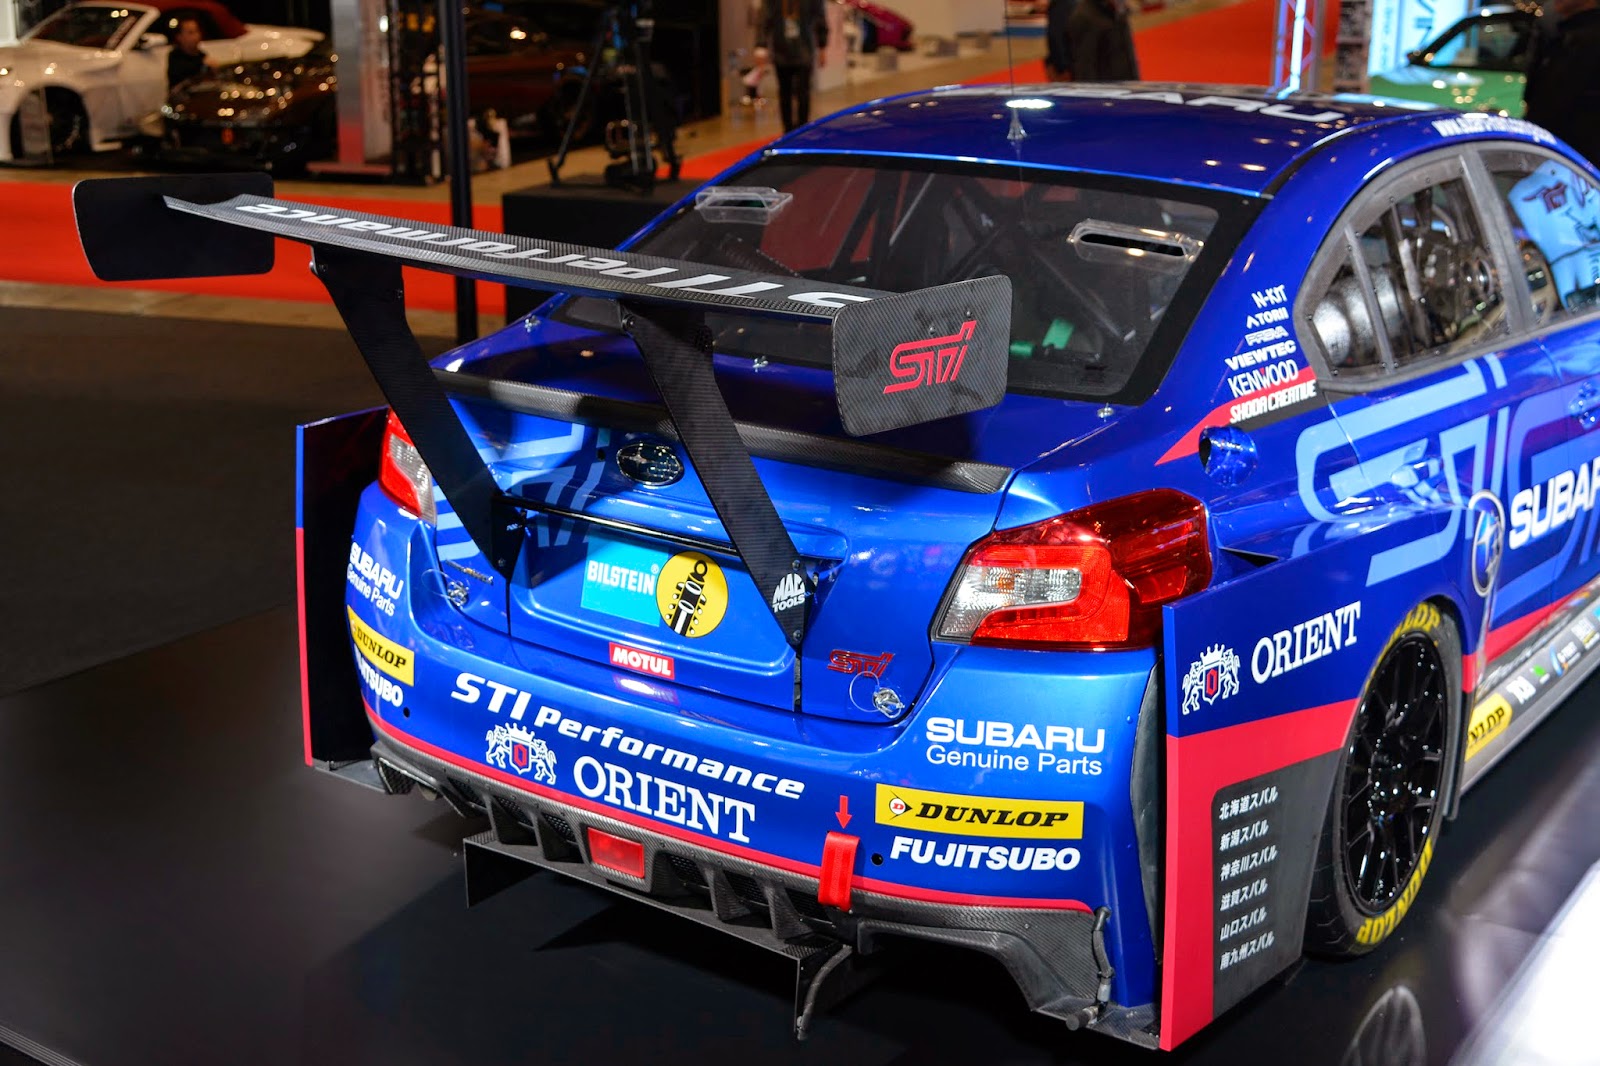 © Automotiveblogz Subaru WRX STI Nurburgring 24 Hour Race Car